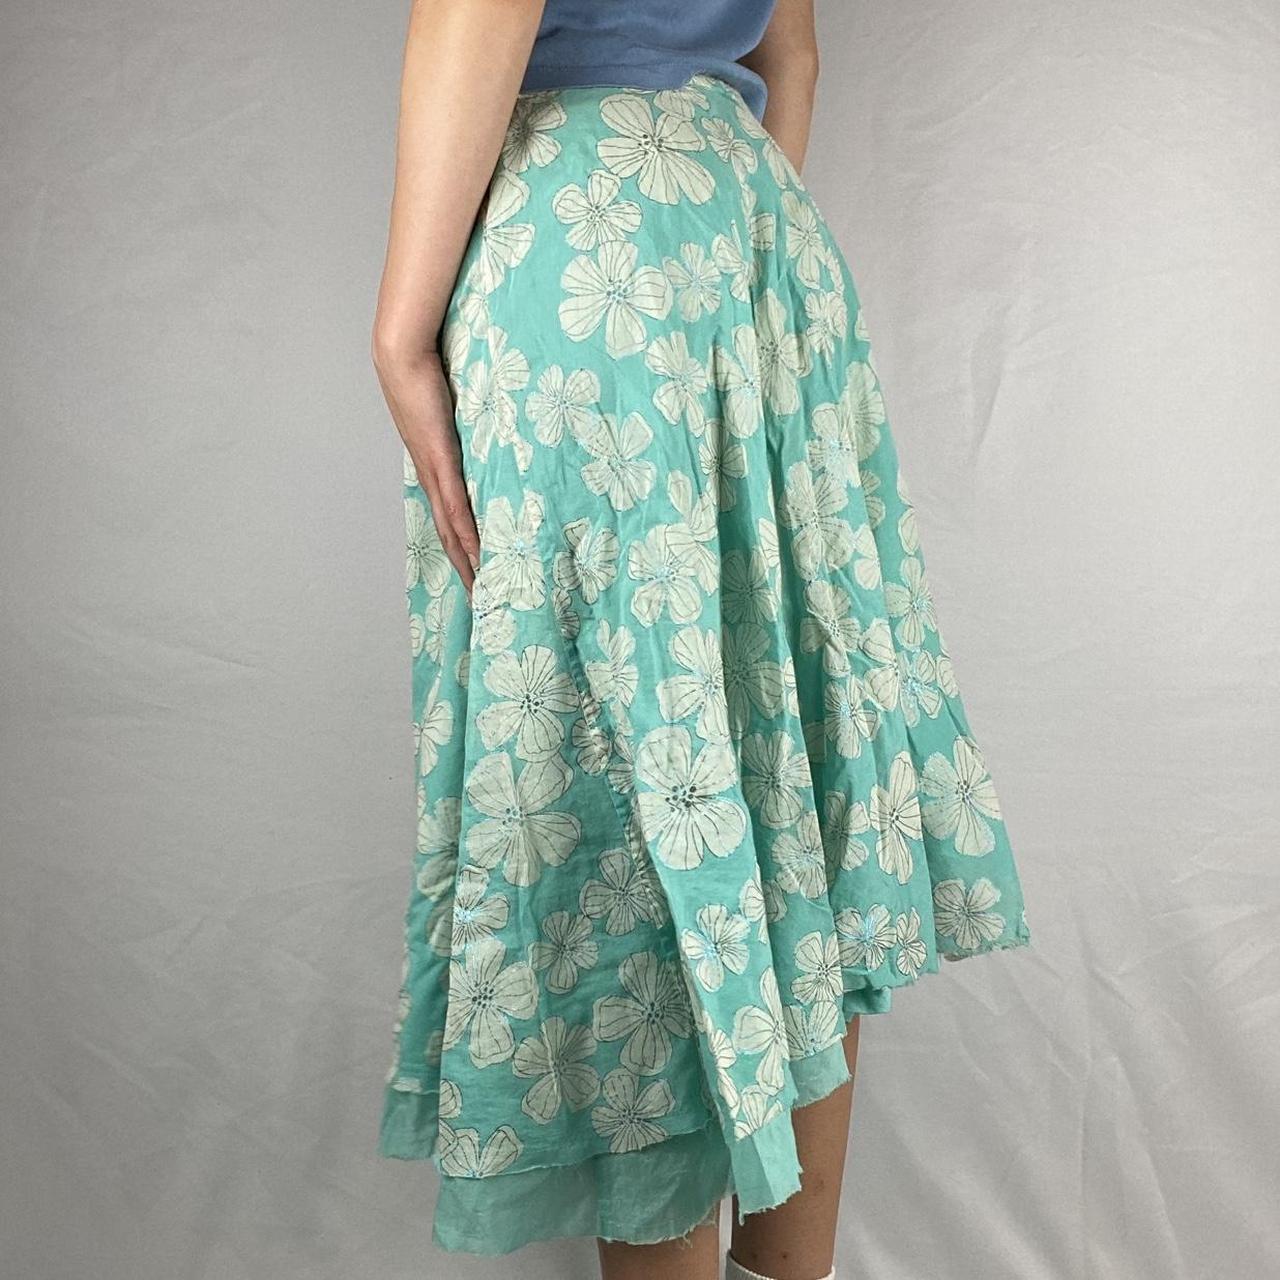 Joie Women's Blue and Green Skirt (2)